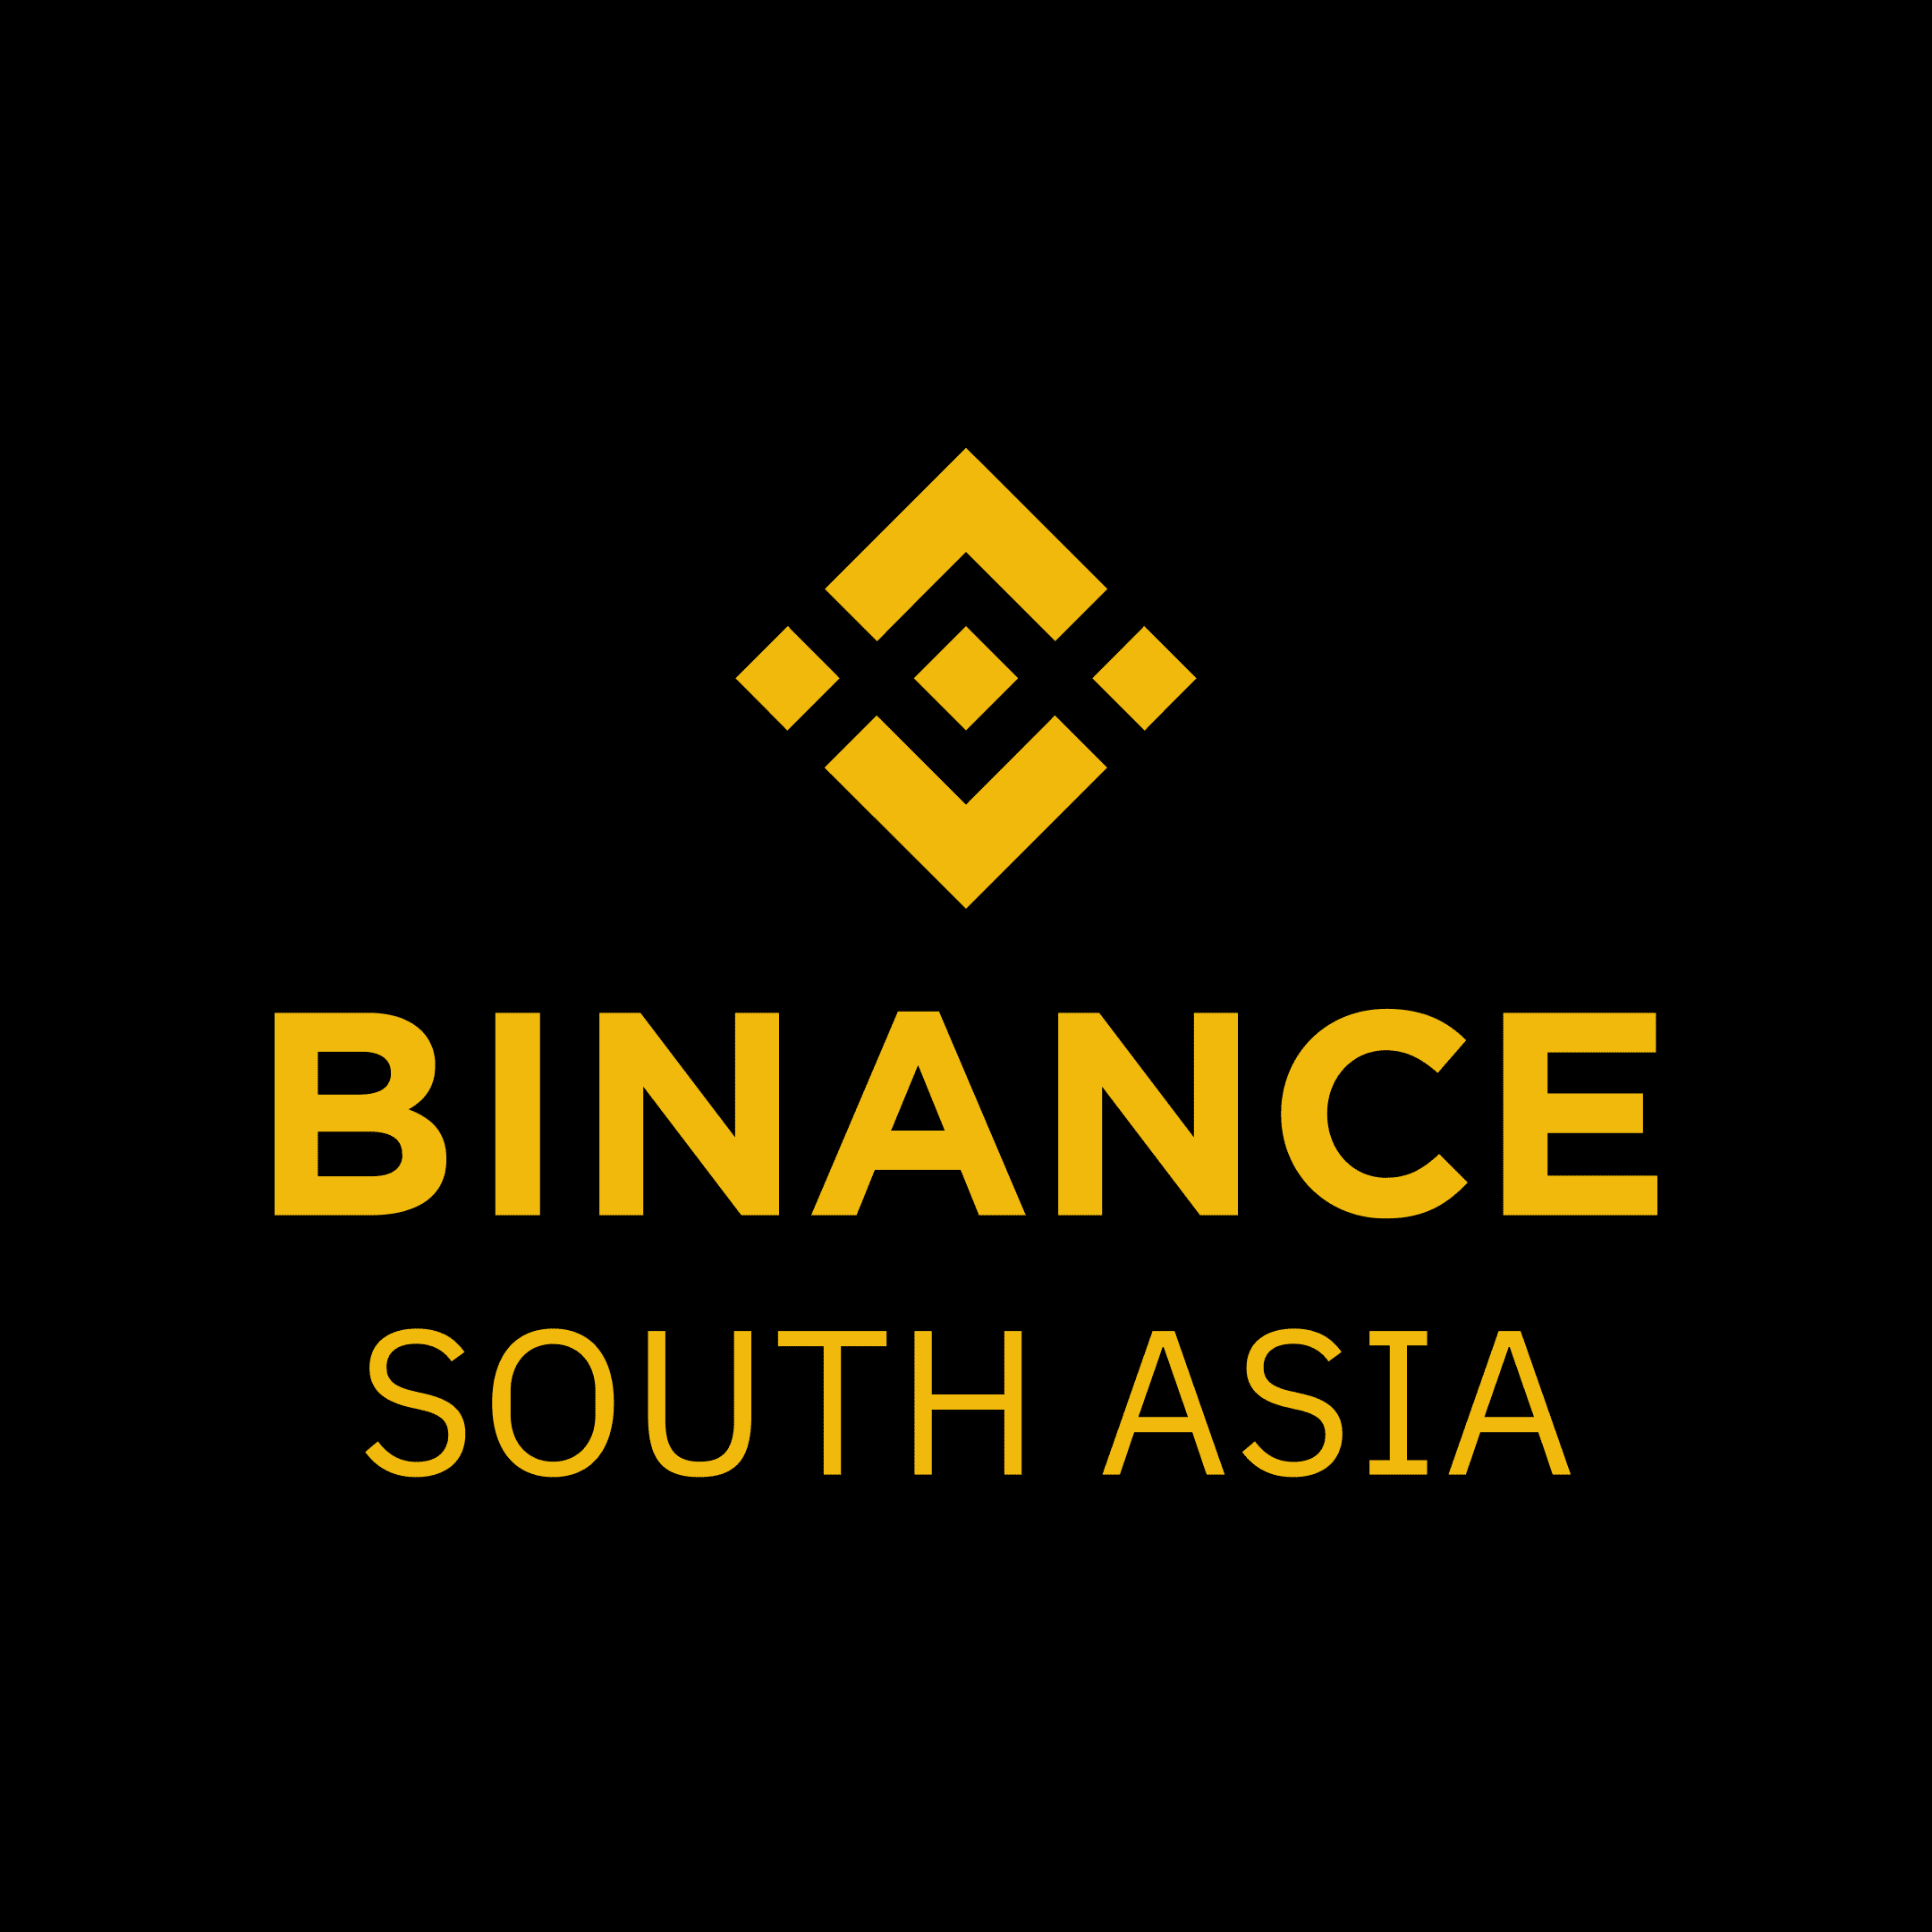 Binance South Asia